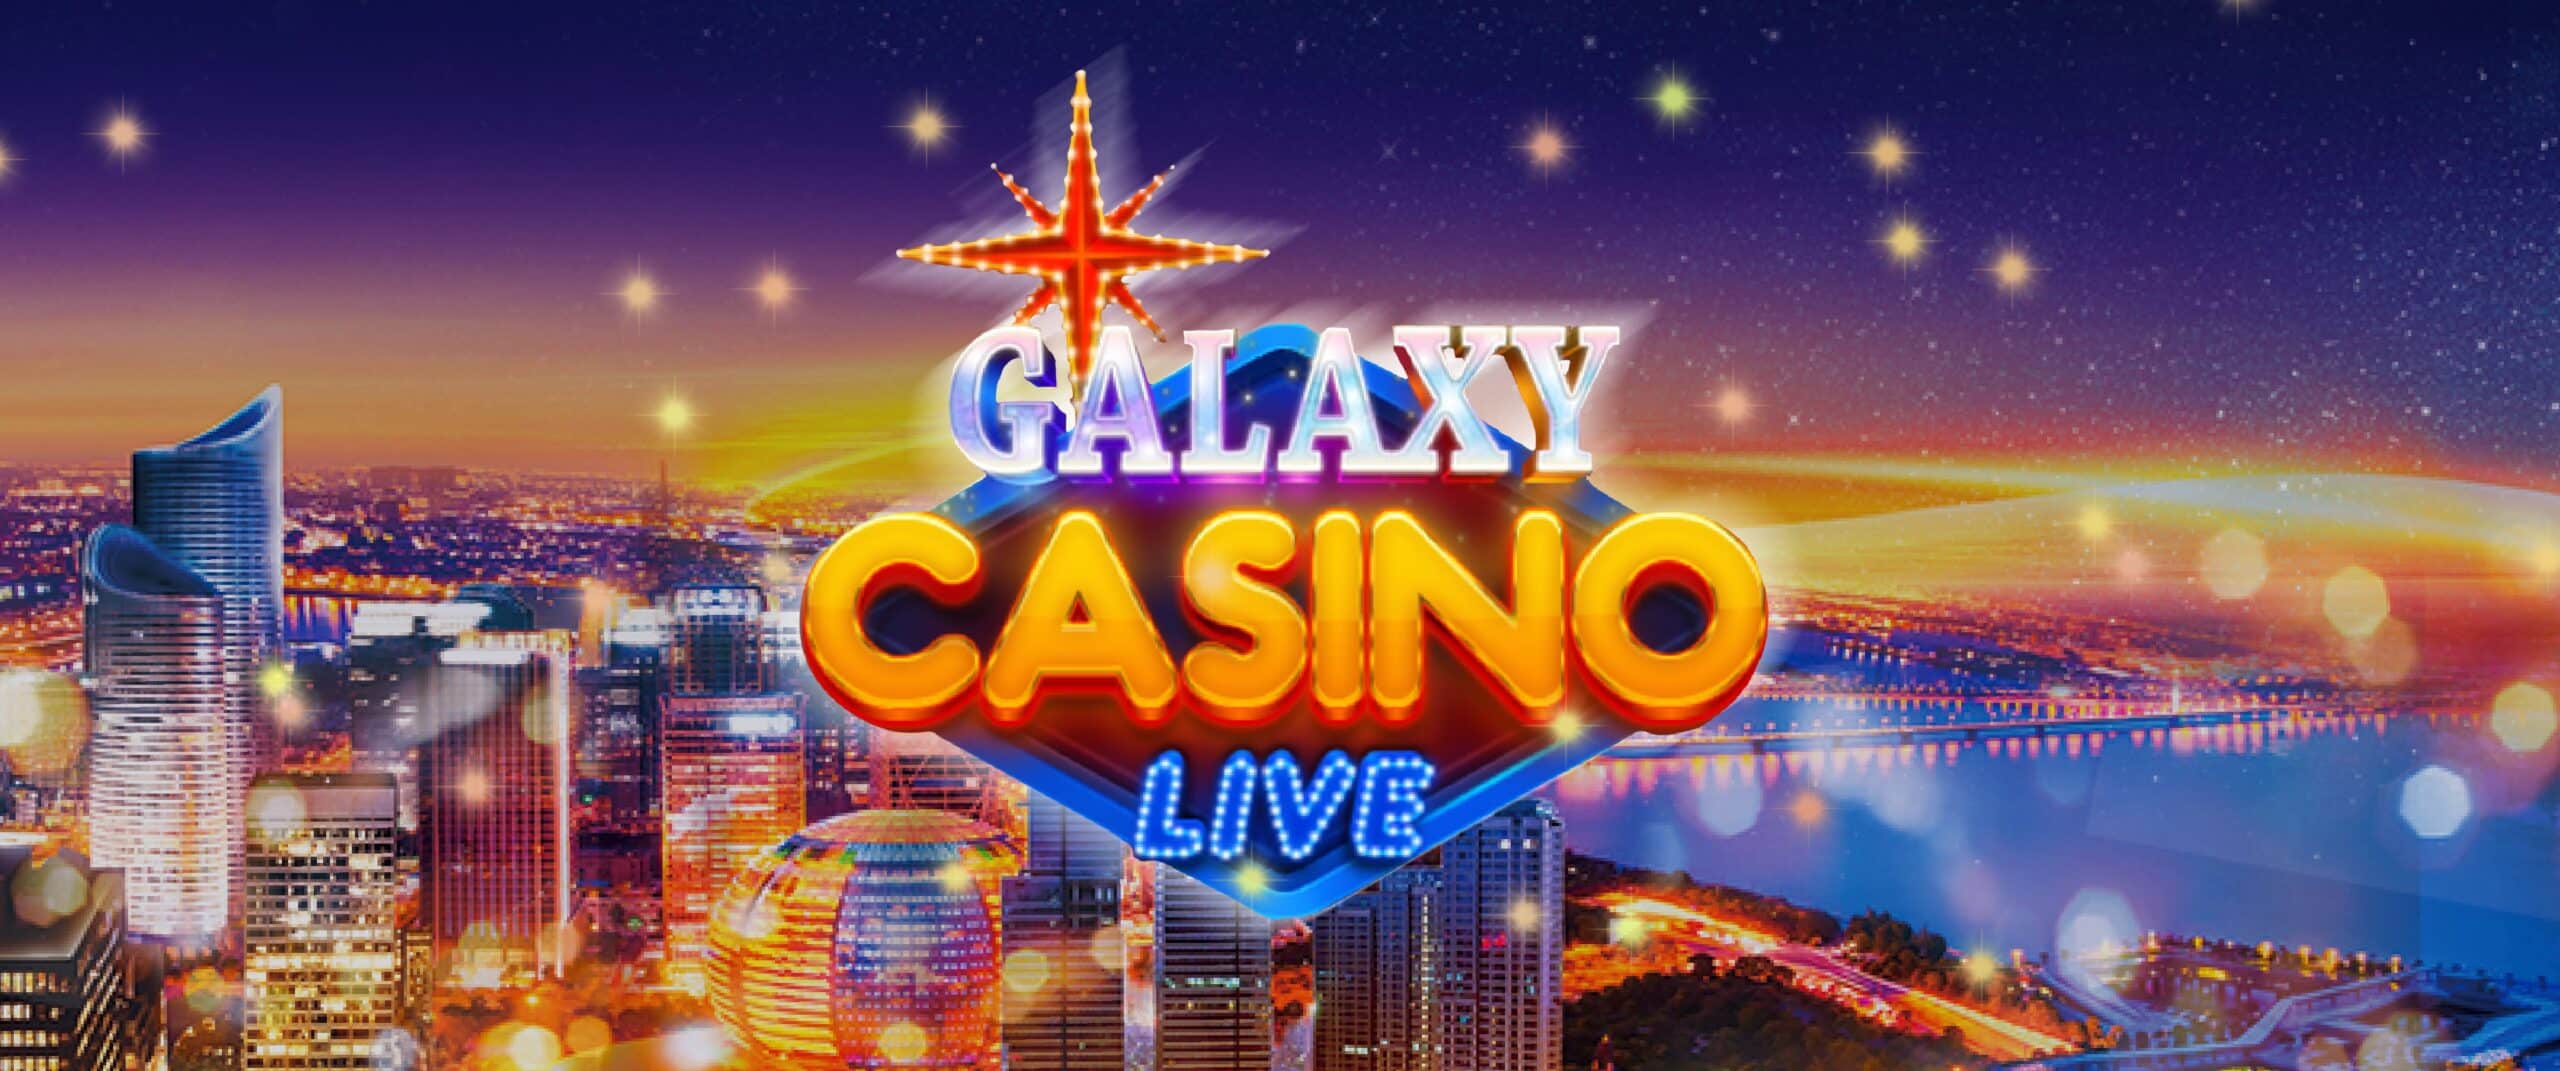 Galaxy Casino rehistro